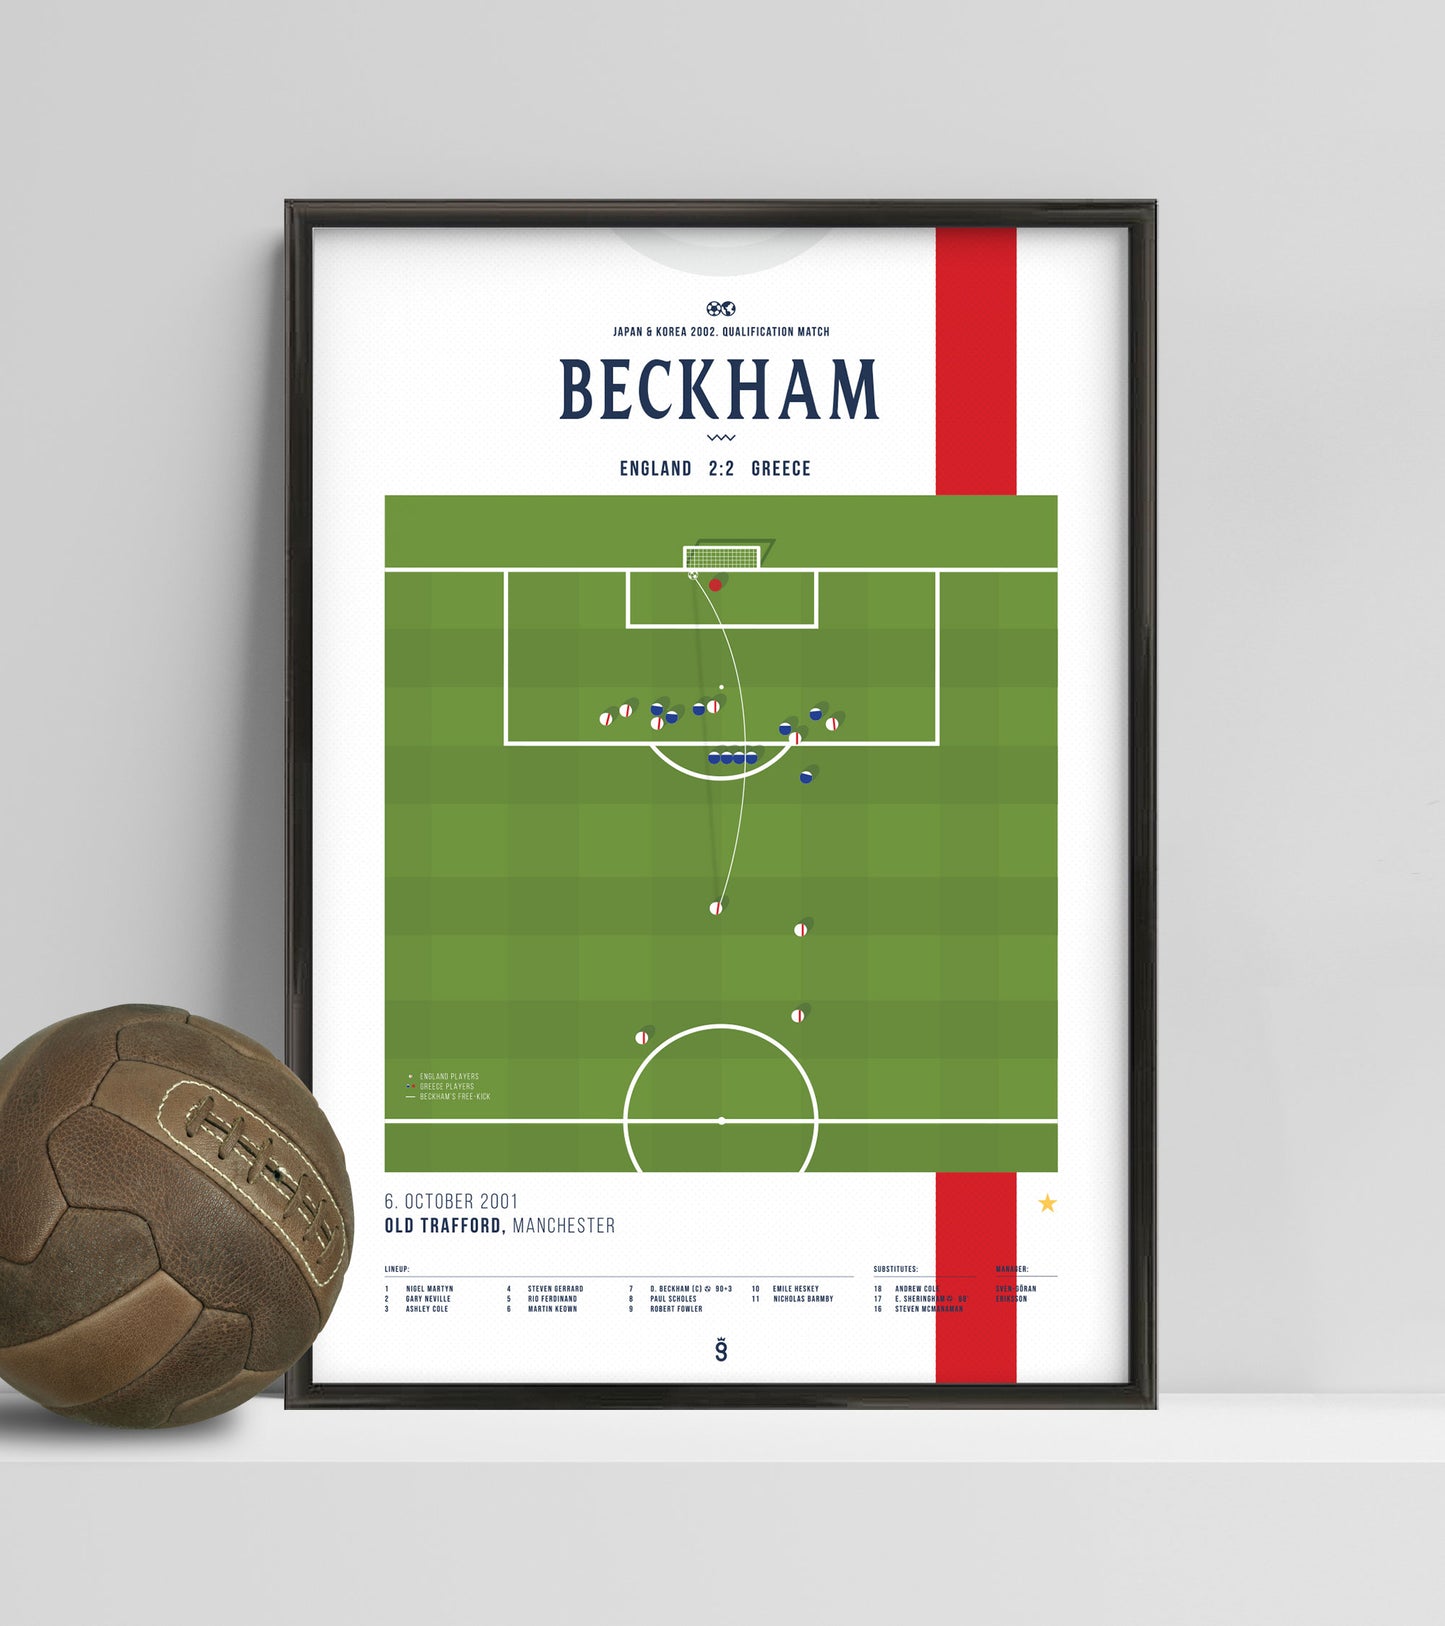 David Beckham's Iconic Free-Kick Against Greece